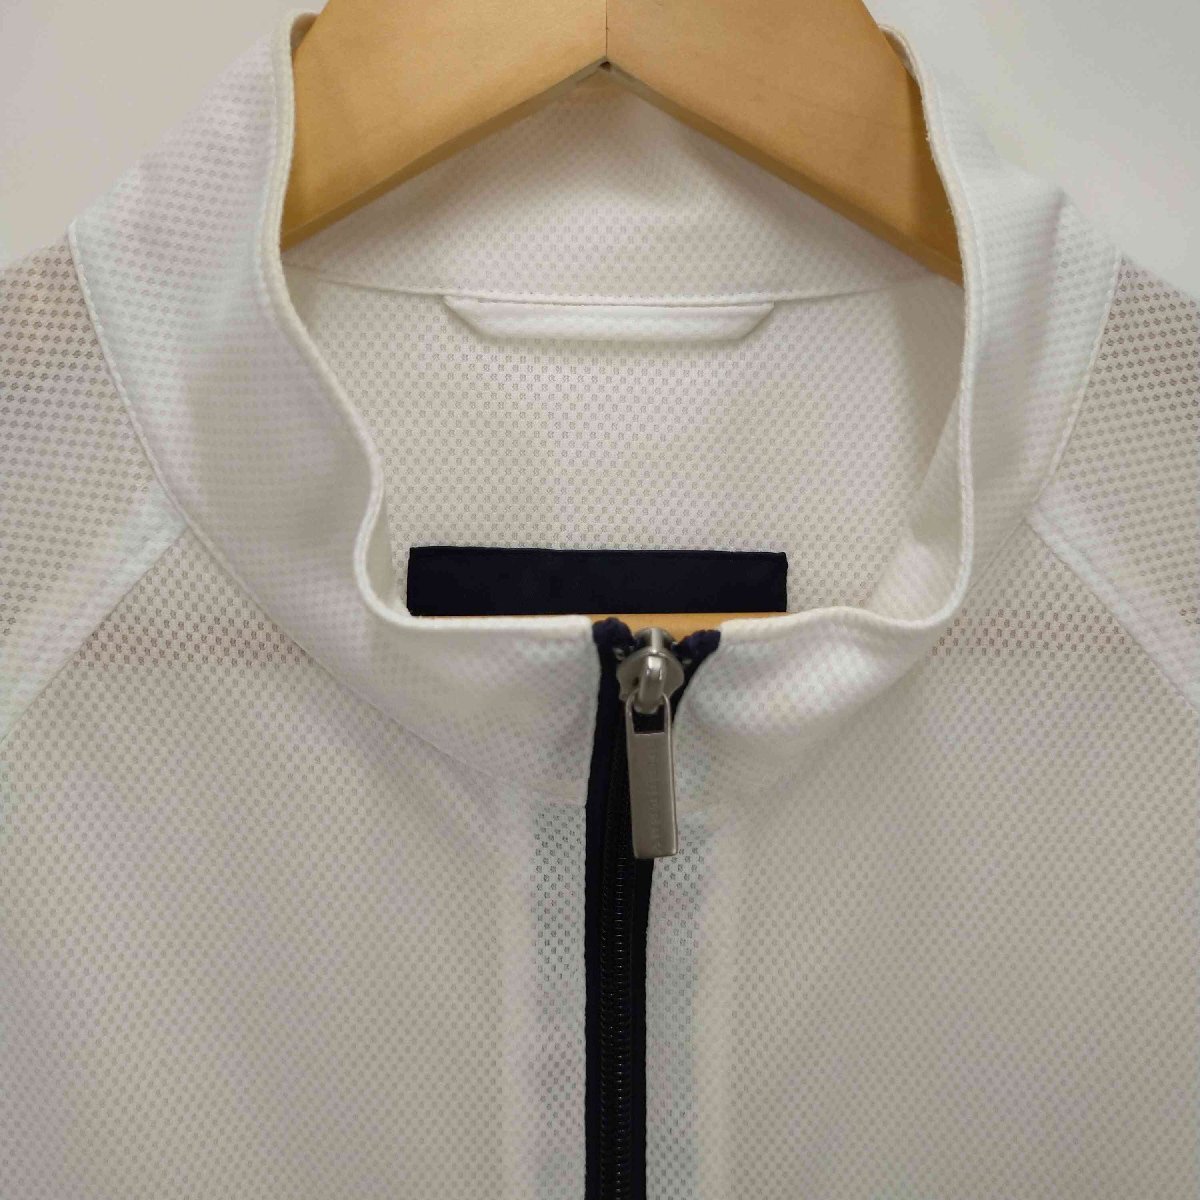 BURBERRY GOLF(バーバリーゴルフ) 裾ドローコード胸元刺繍ジップアップジャケット メンズ JP 中古 古着 1222_画像3